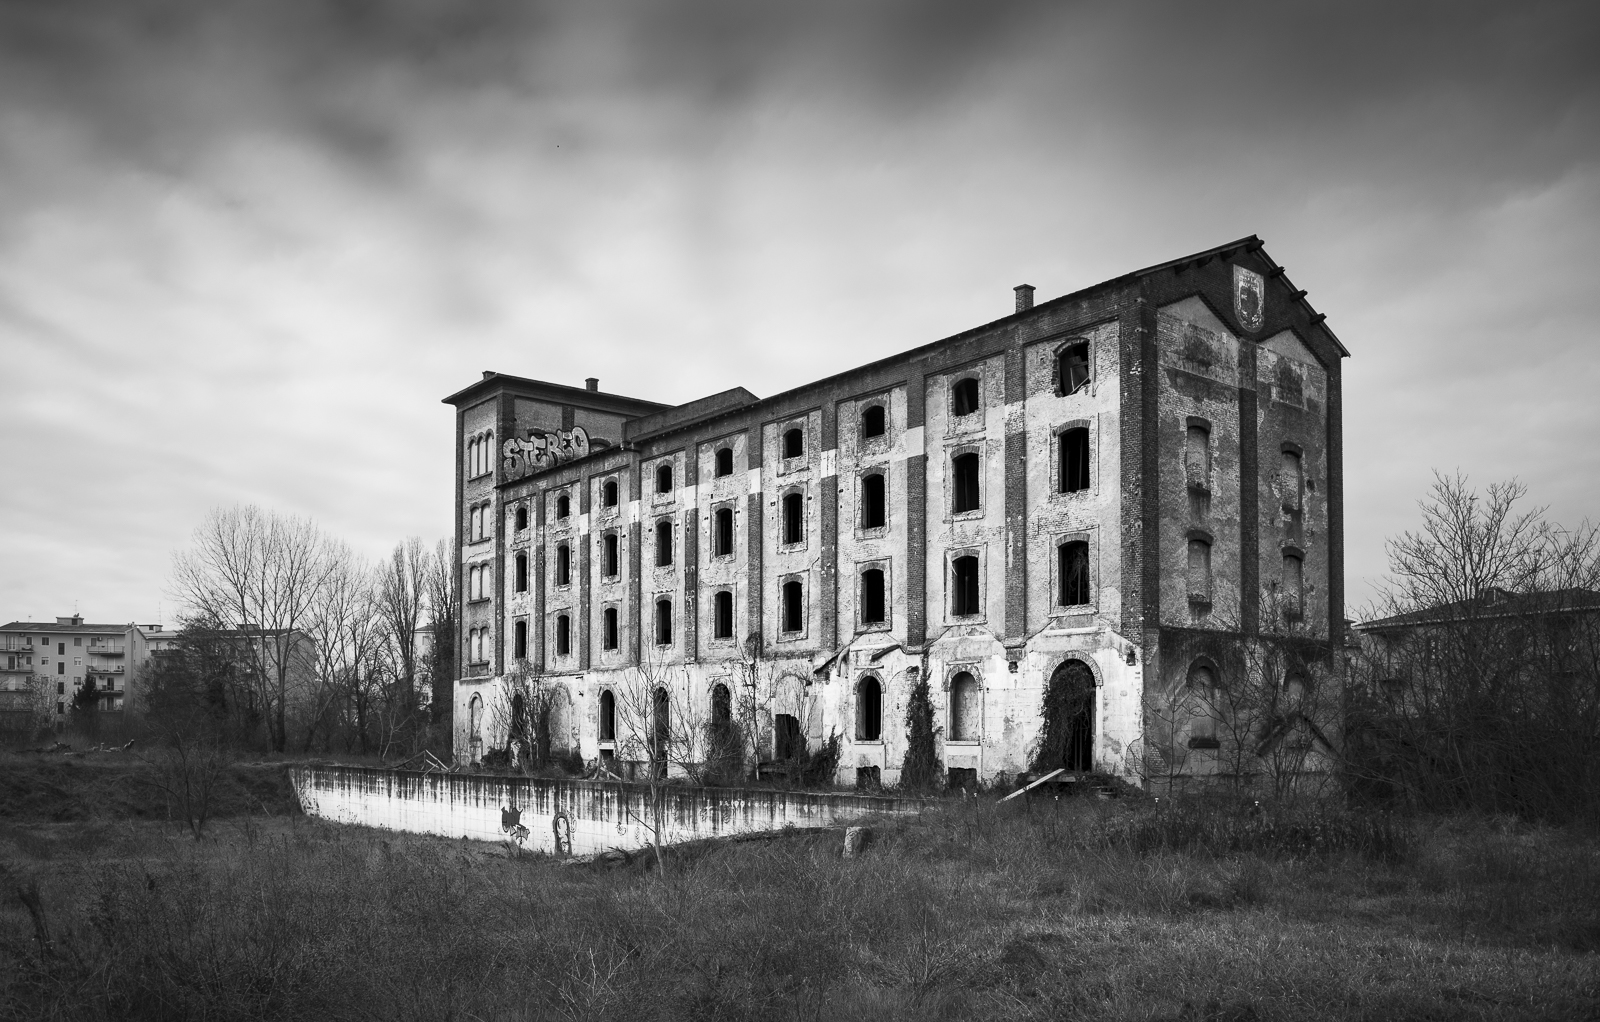 Abandoned beauty 
Pavia, dicembre 2017